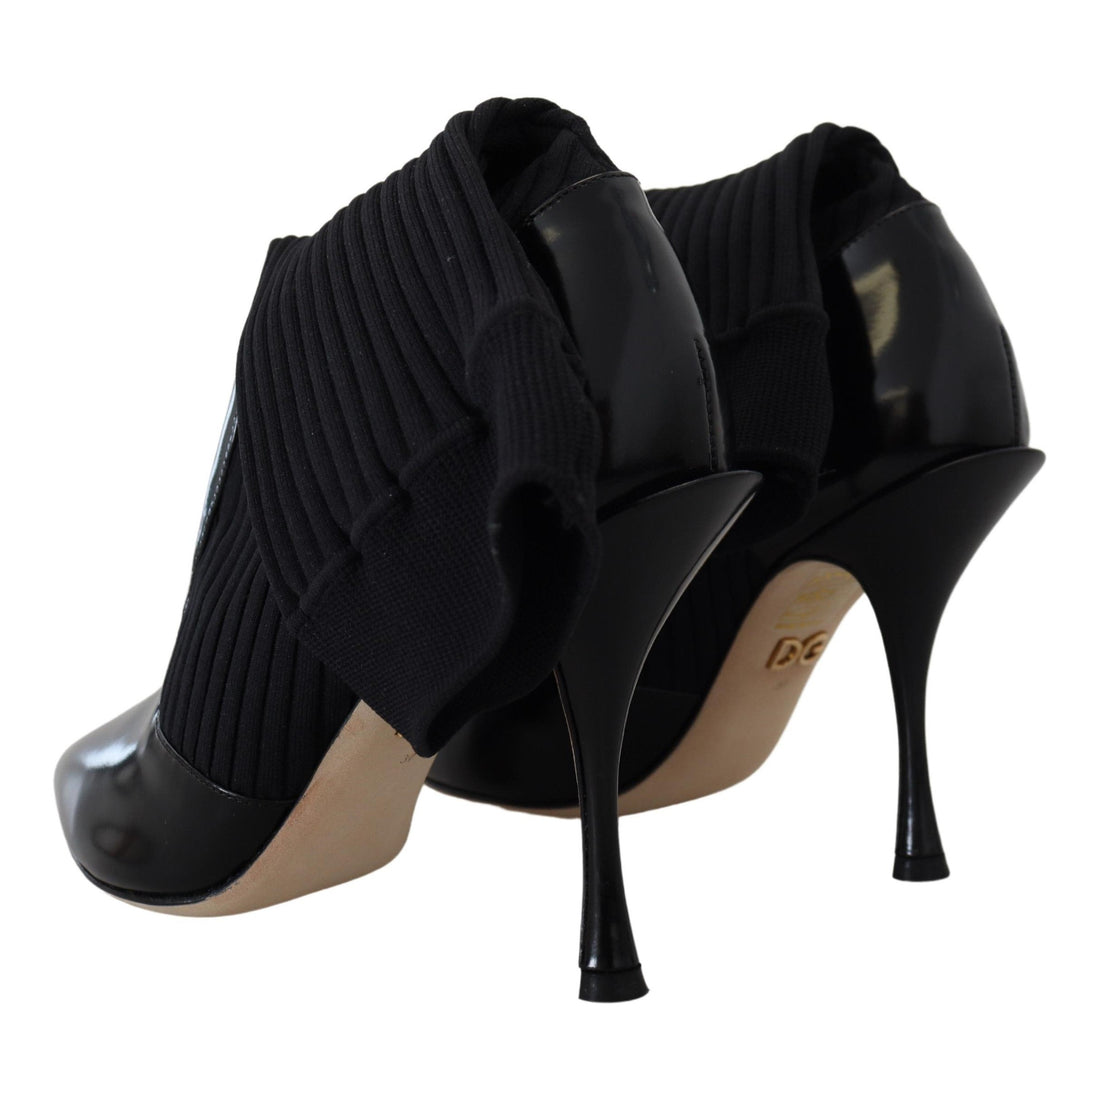 Dolce & Gabbana Black Socks Stiletto Heels Booties Shoes